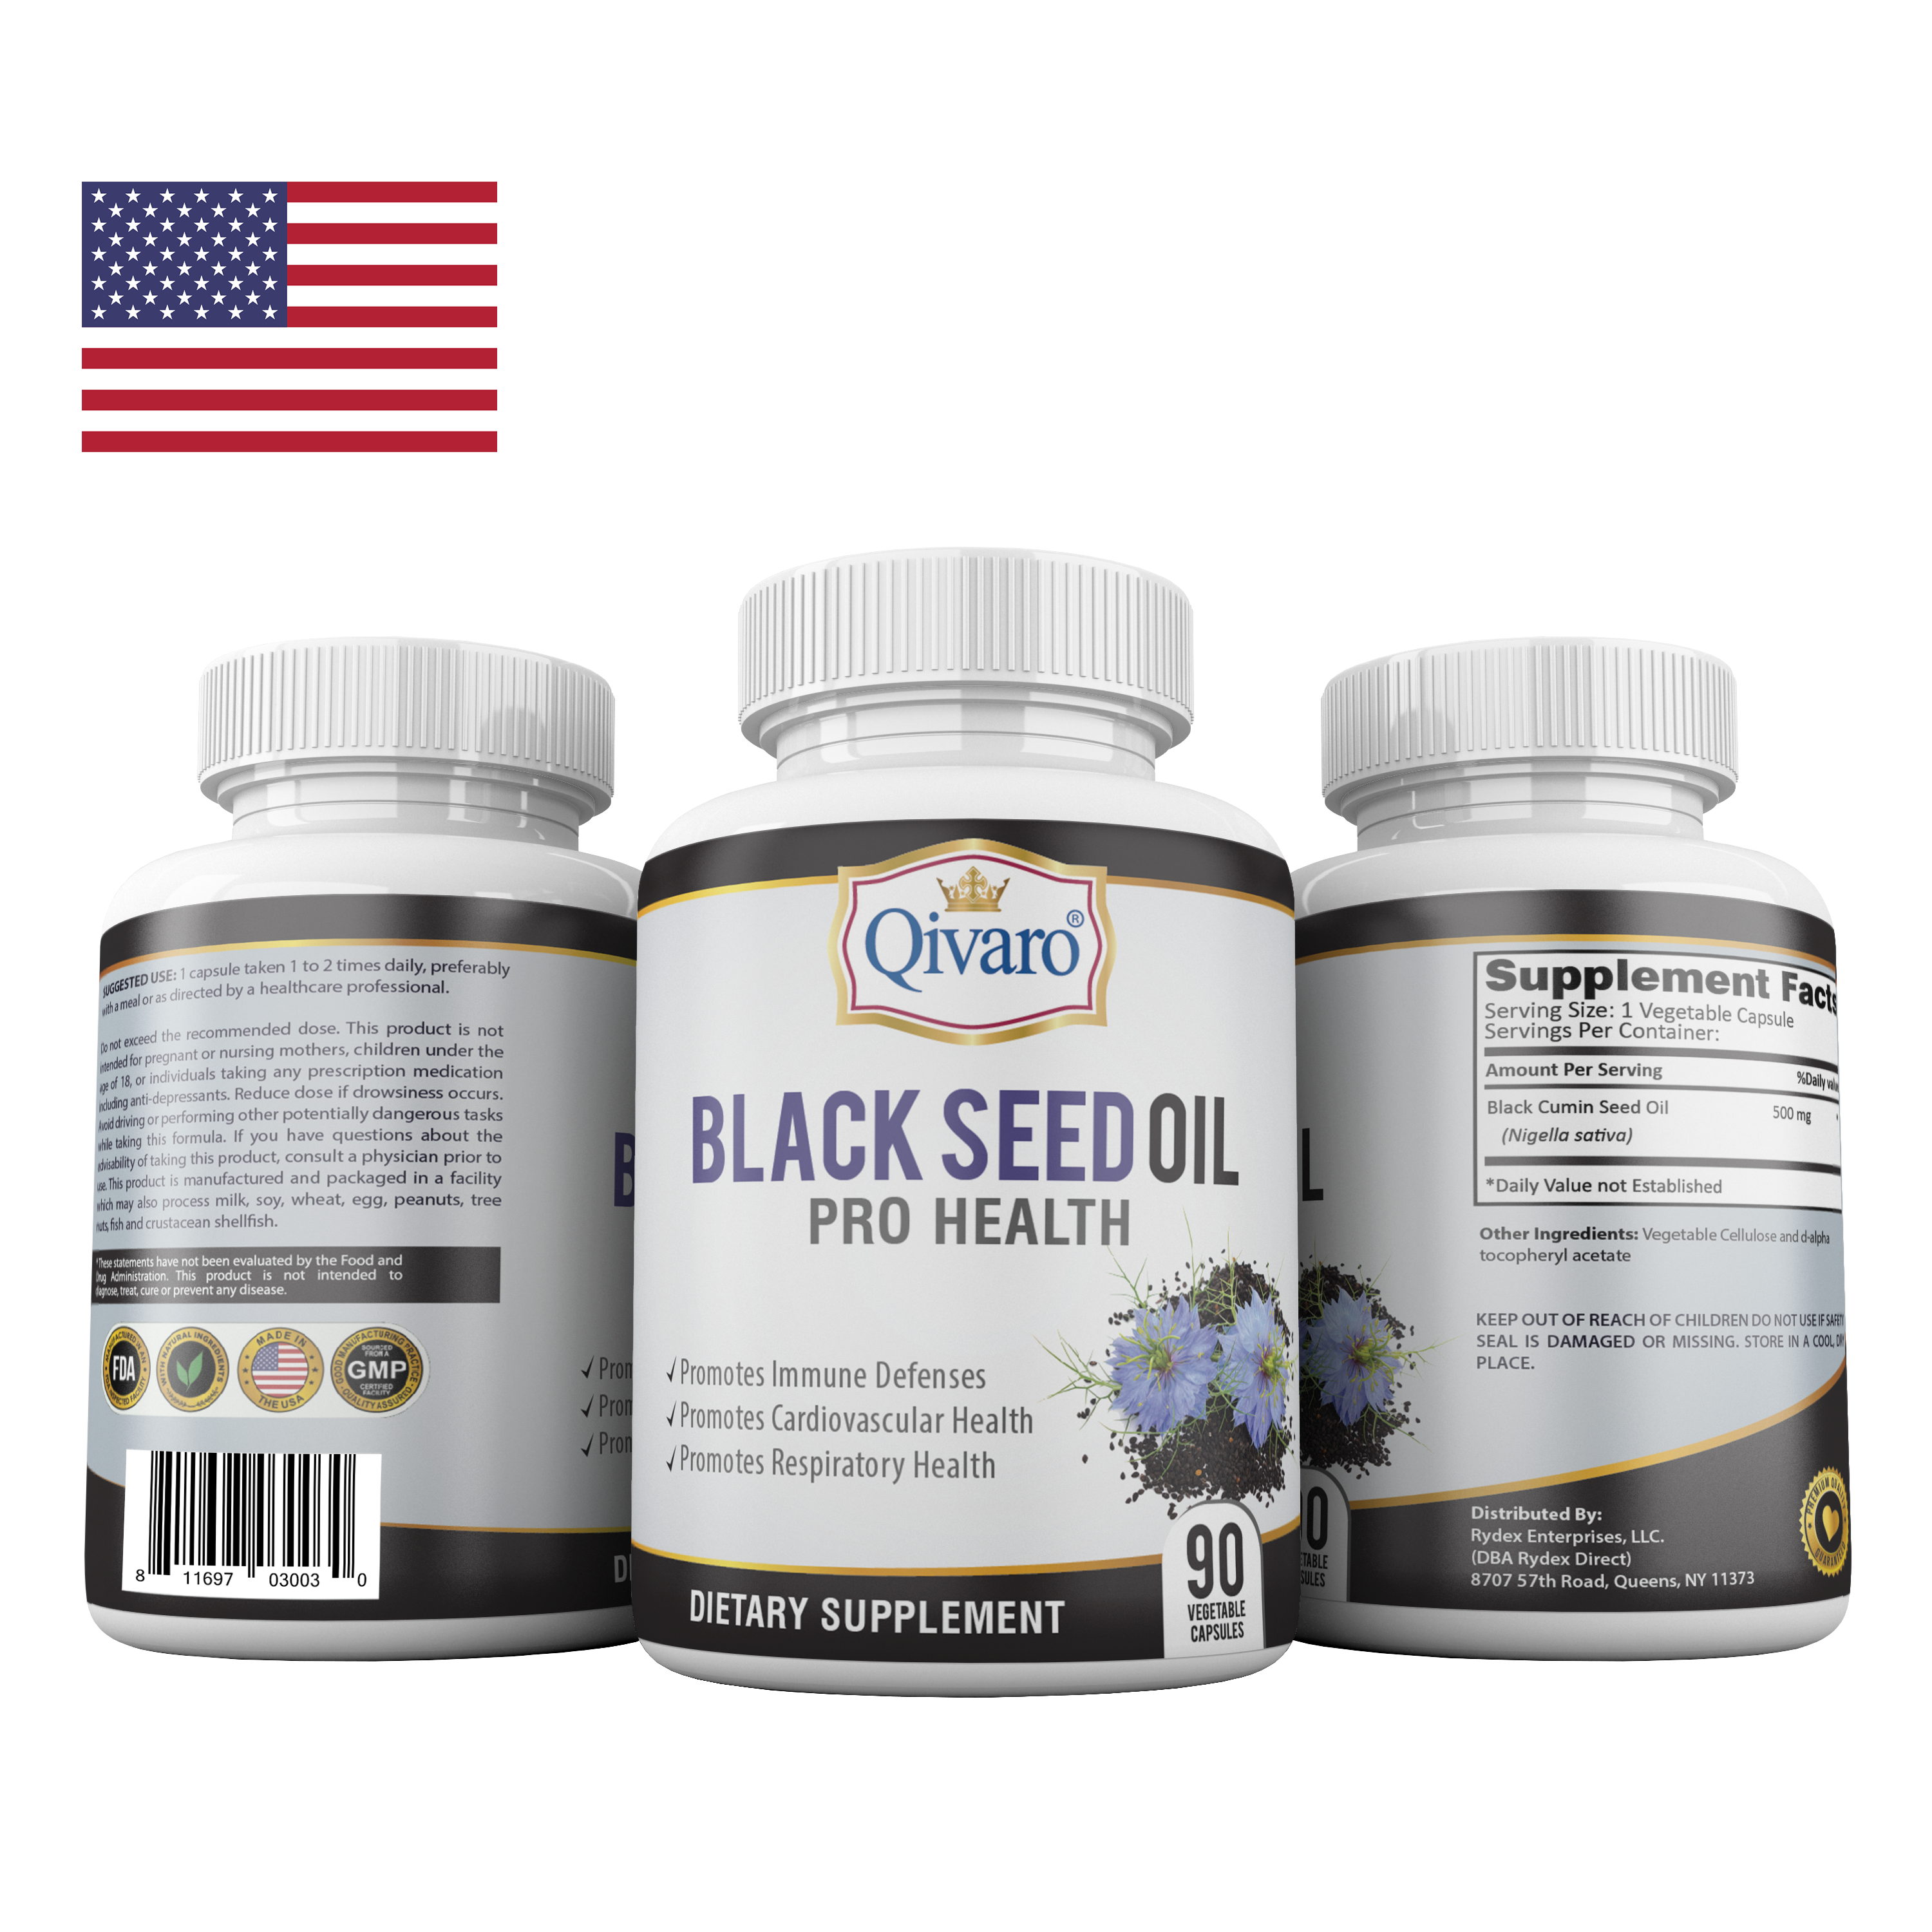 Combo 3-in-1 Pack: QIH01 Black Seed Oil